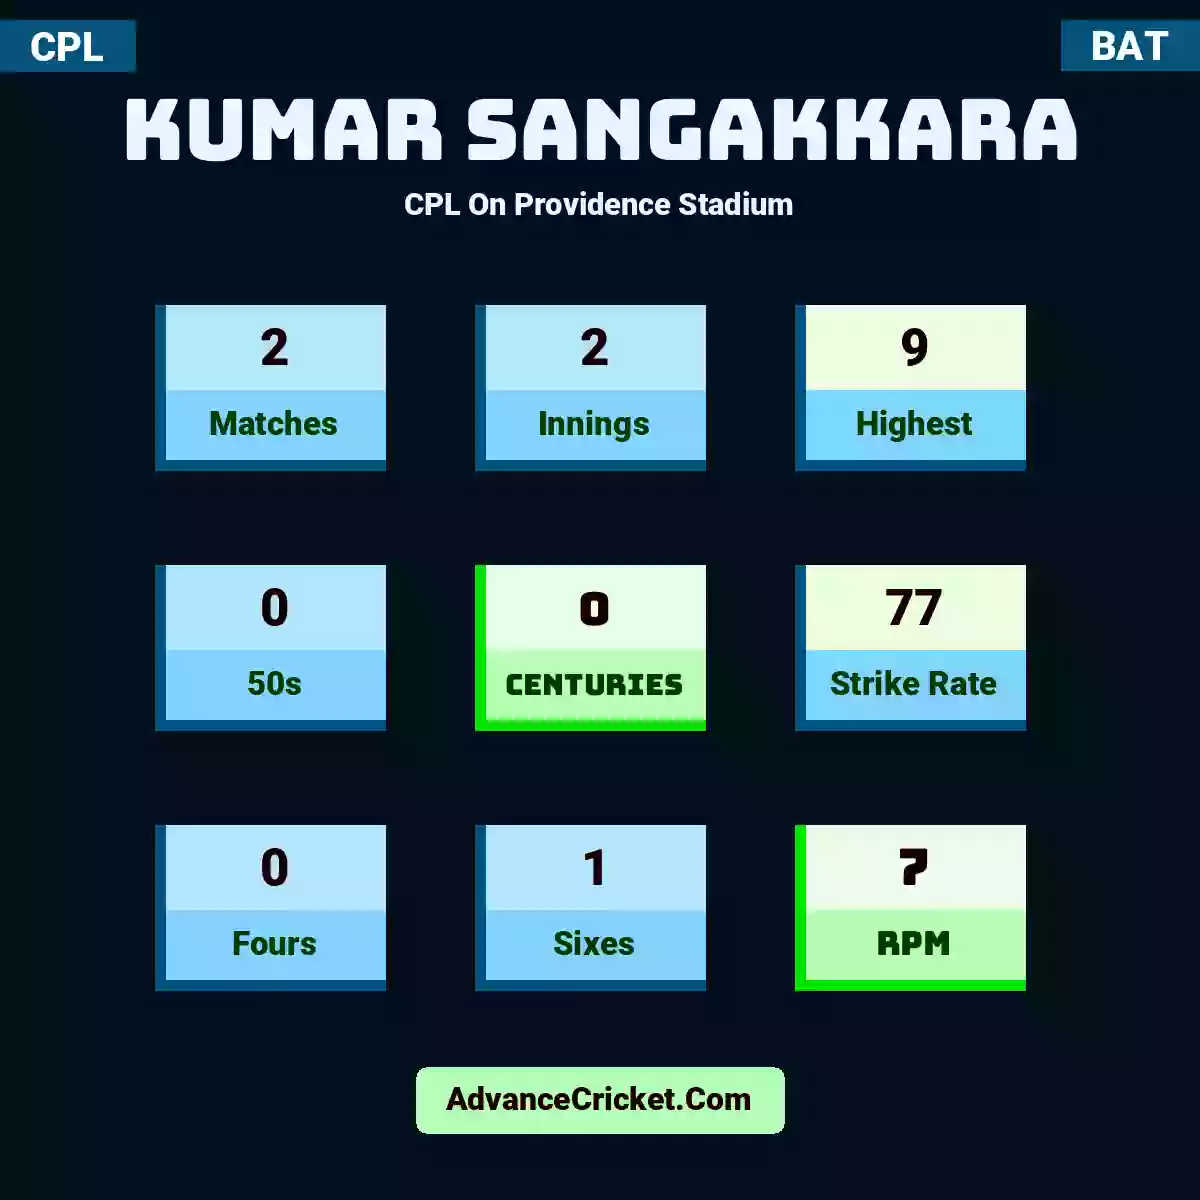 Kumar Sangakkara CPL  On Providence Stadium, Kumar Sangakkara played 2 matches, scored 9 runs as highest, 0 half-centuries, and 0 centuries, with a strike rate of 77. K.Sangakkara hit 0 fours and 1 sixes, with an RPM of 7.